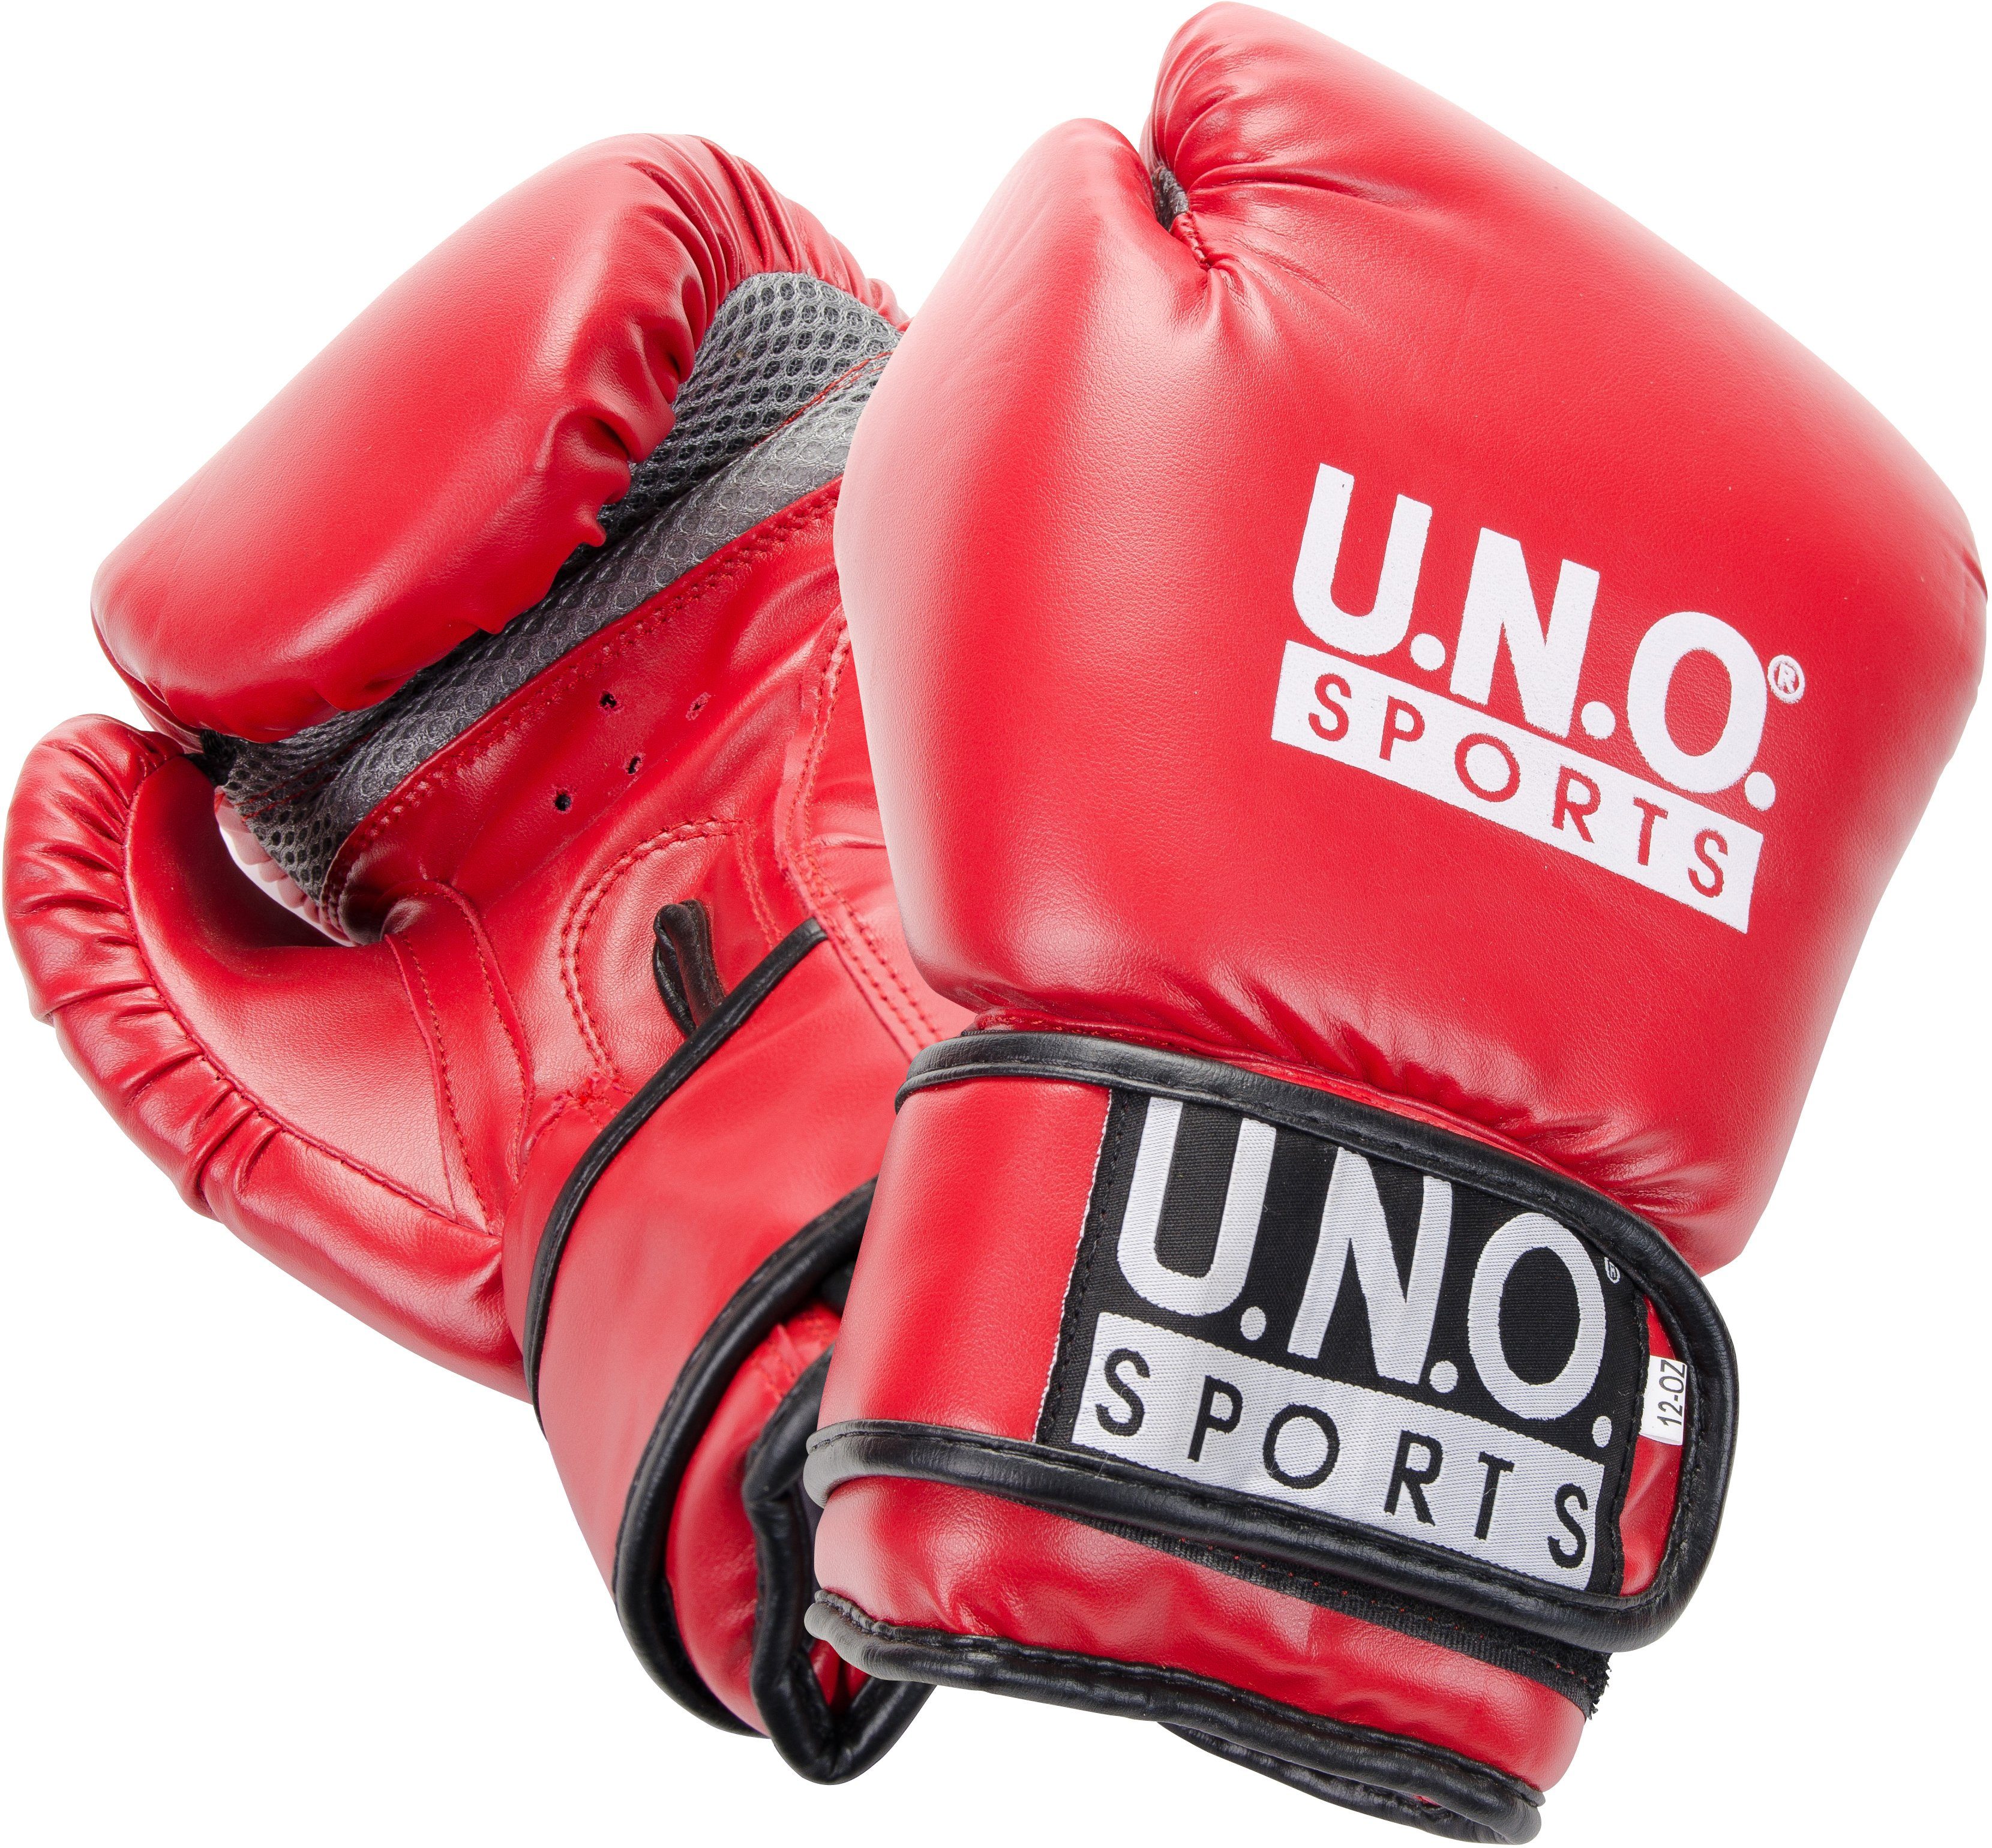 U.N.O. SPORTS Boxhandschuhe Fun, für Heimtraining leichtes